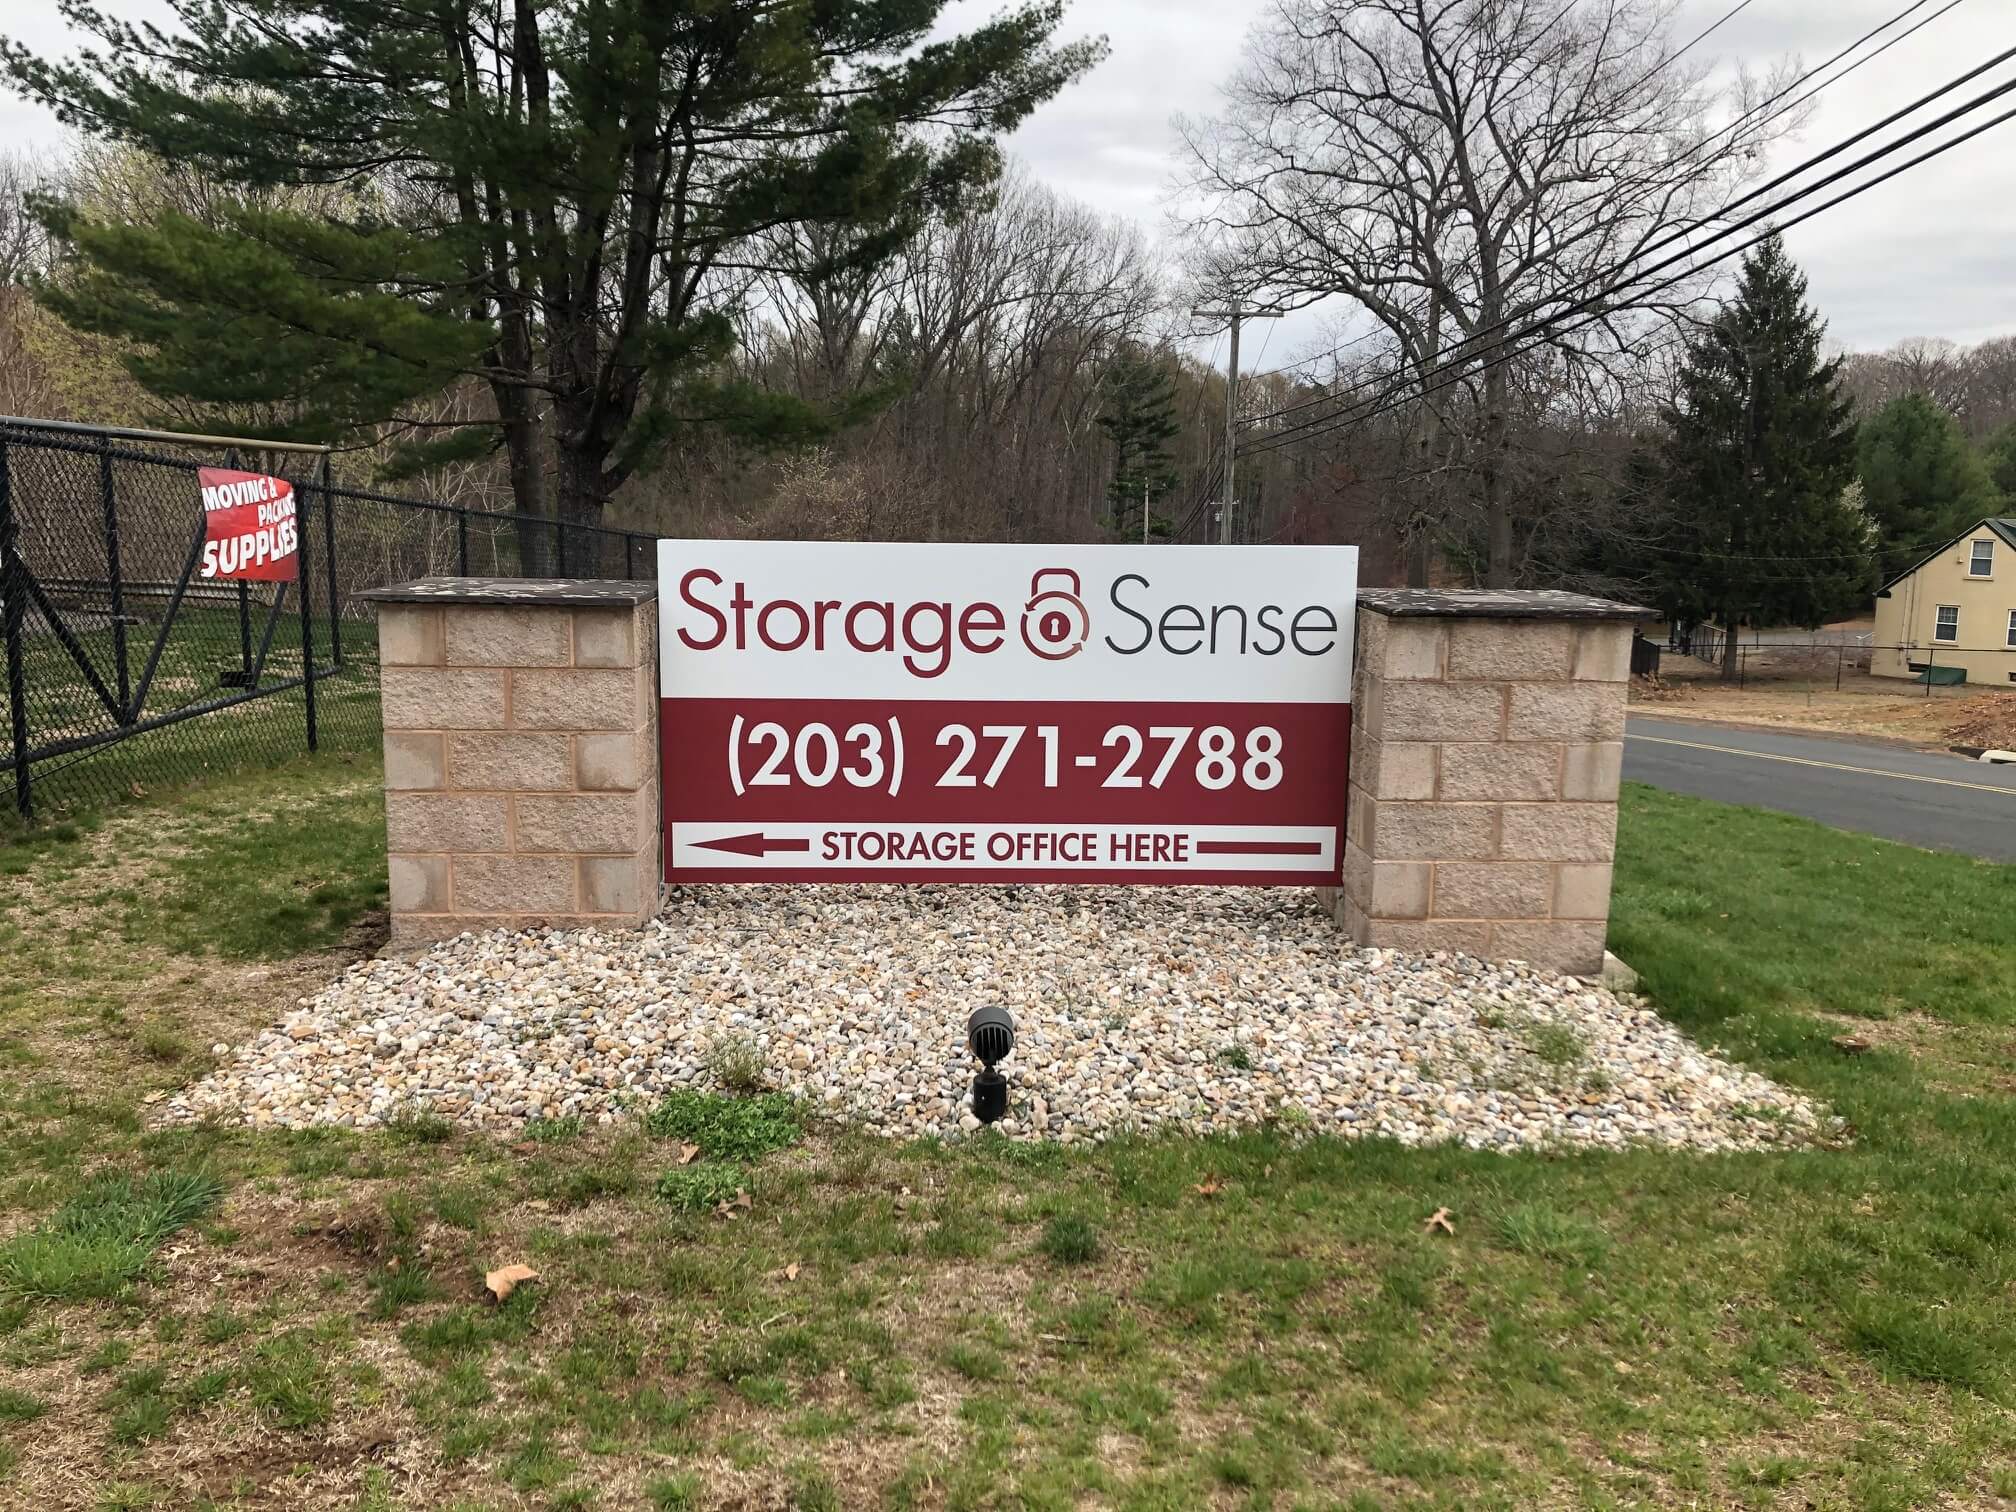 Storage Sense